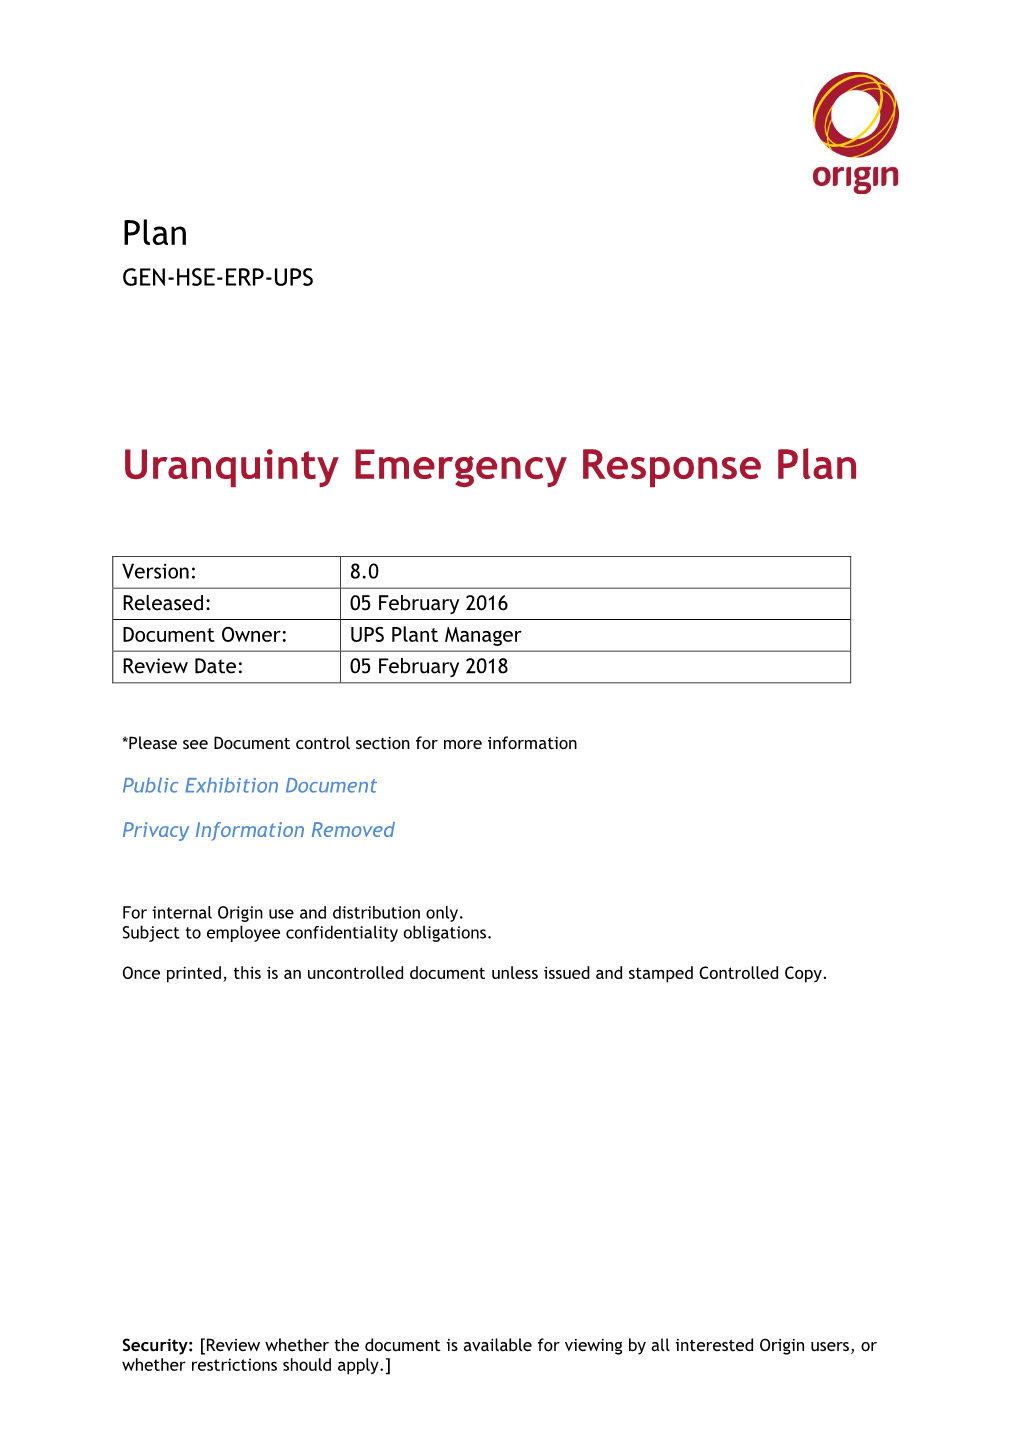 Uranquinty Emergency Response Plan